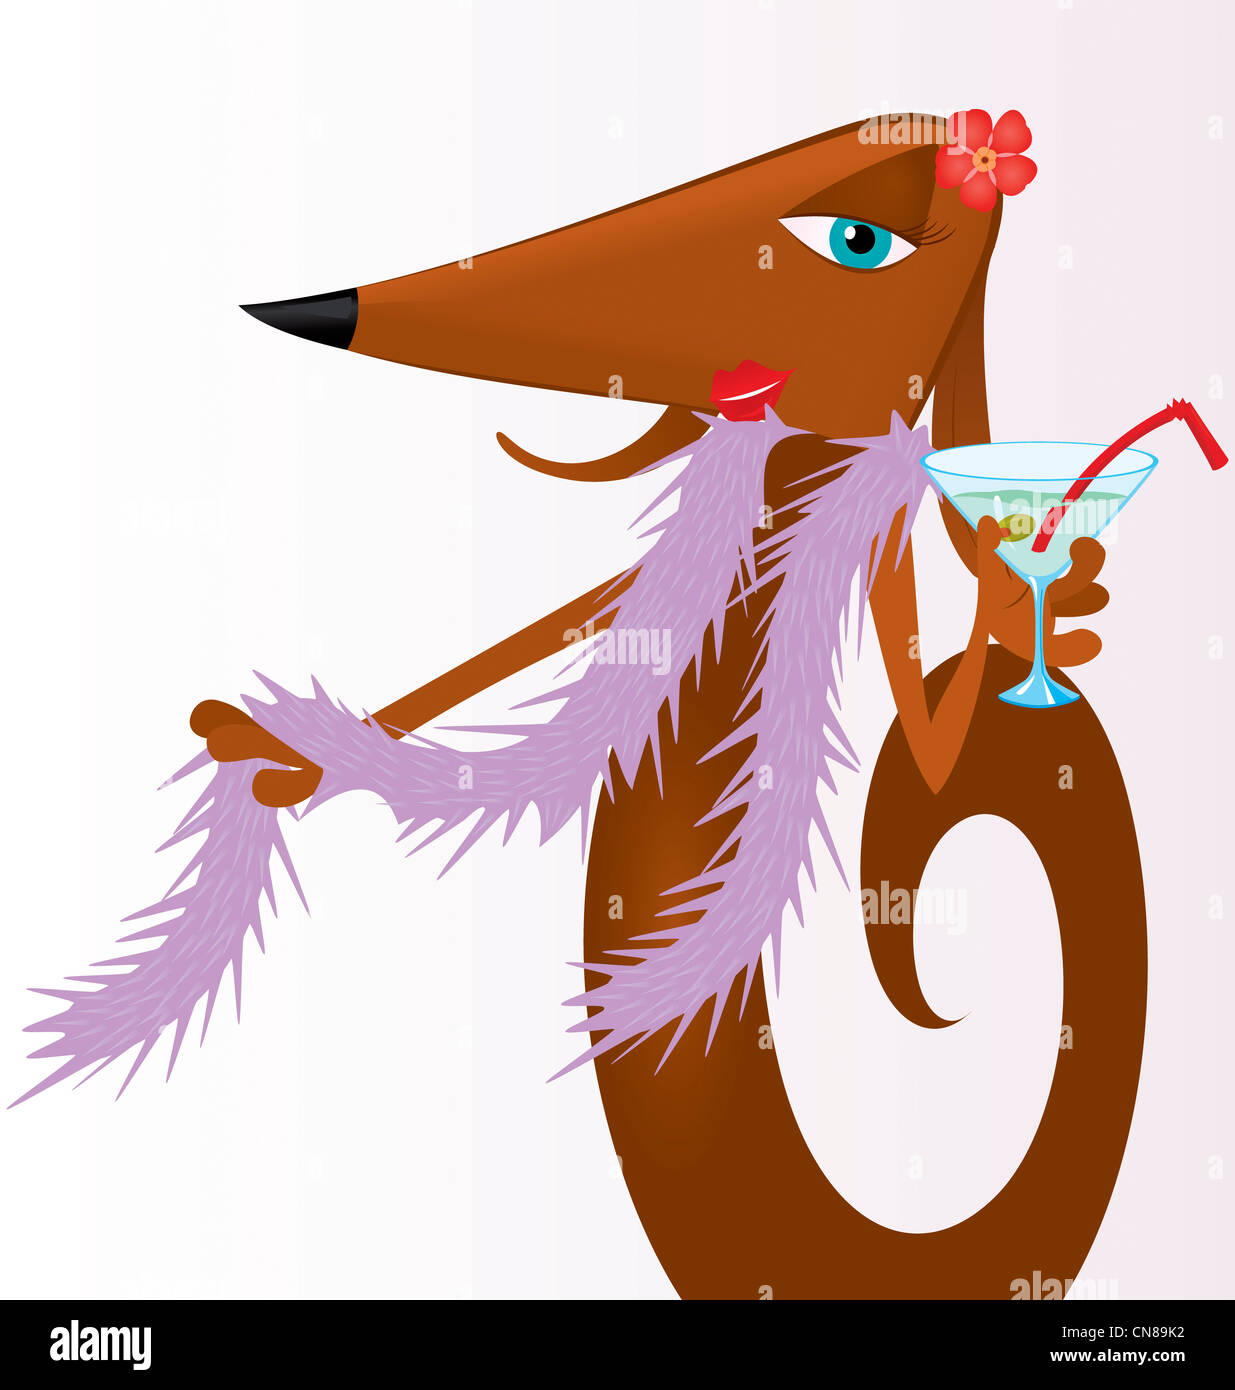 Personnage de chien holding cocktail martini vector illustration Banque D'Images